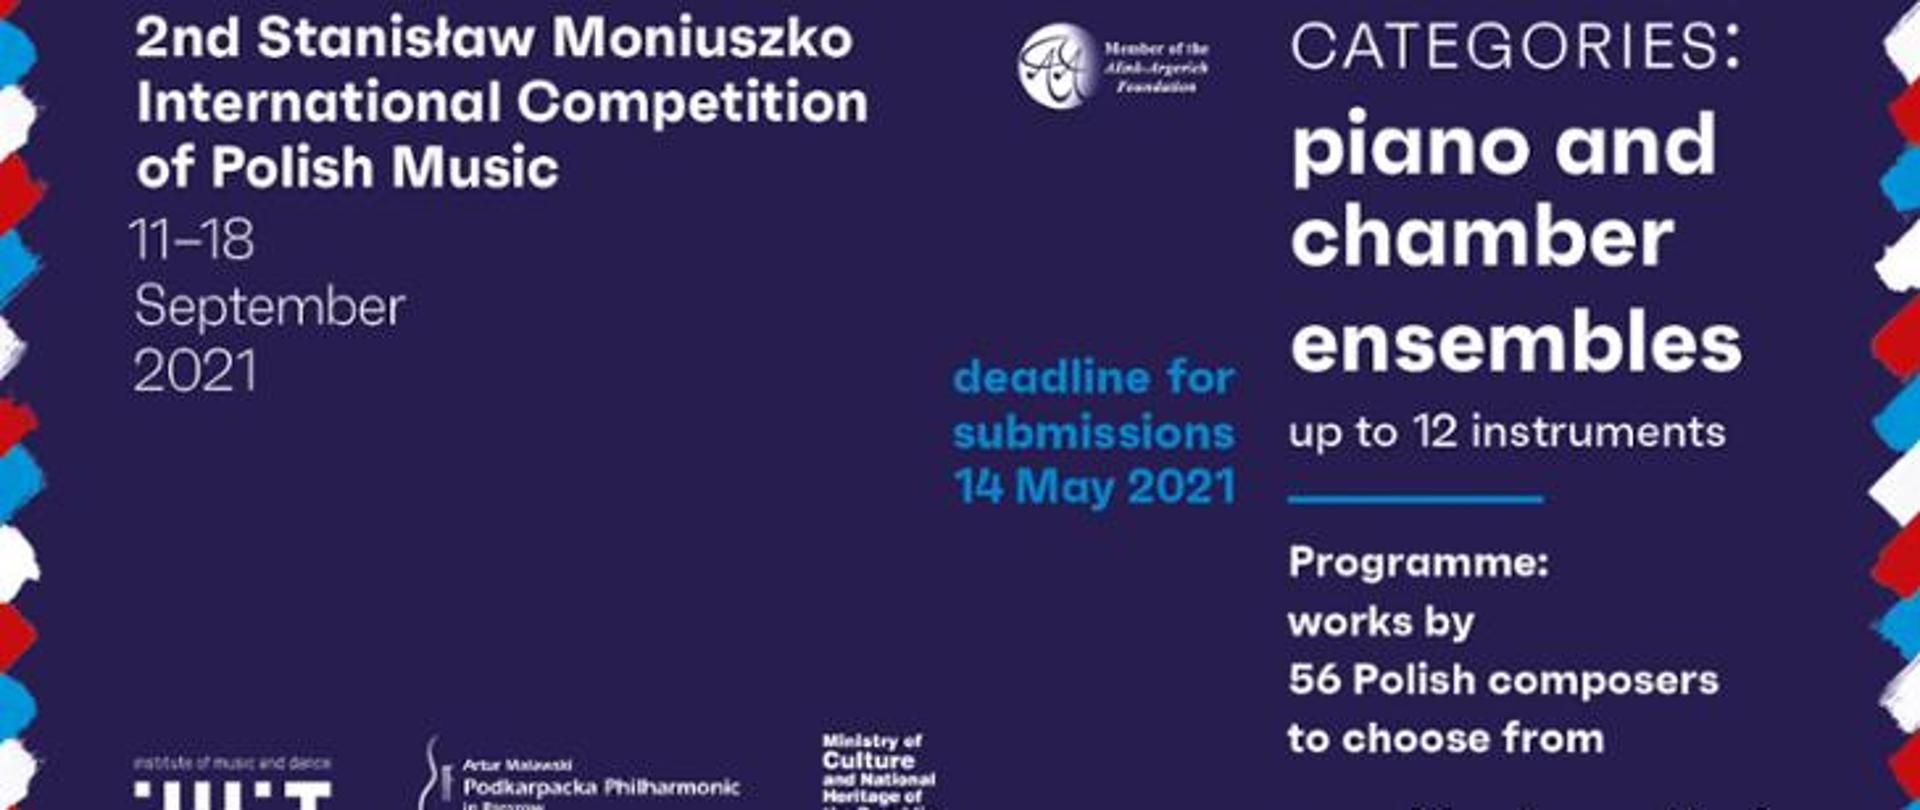 2nd Stanisław Moniuszko International Competition of Polish Music 2021